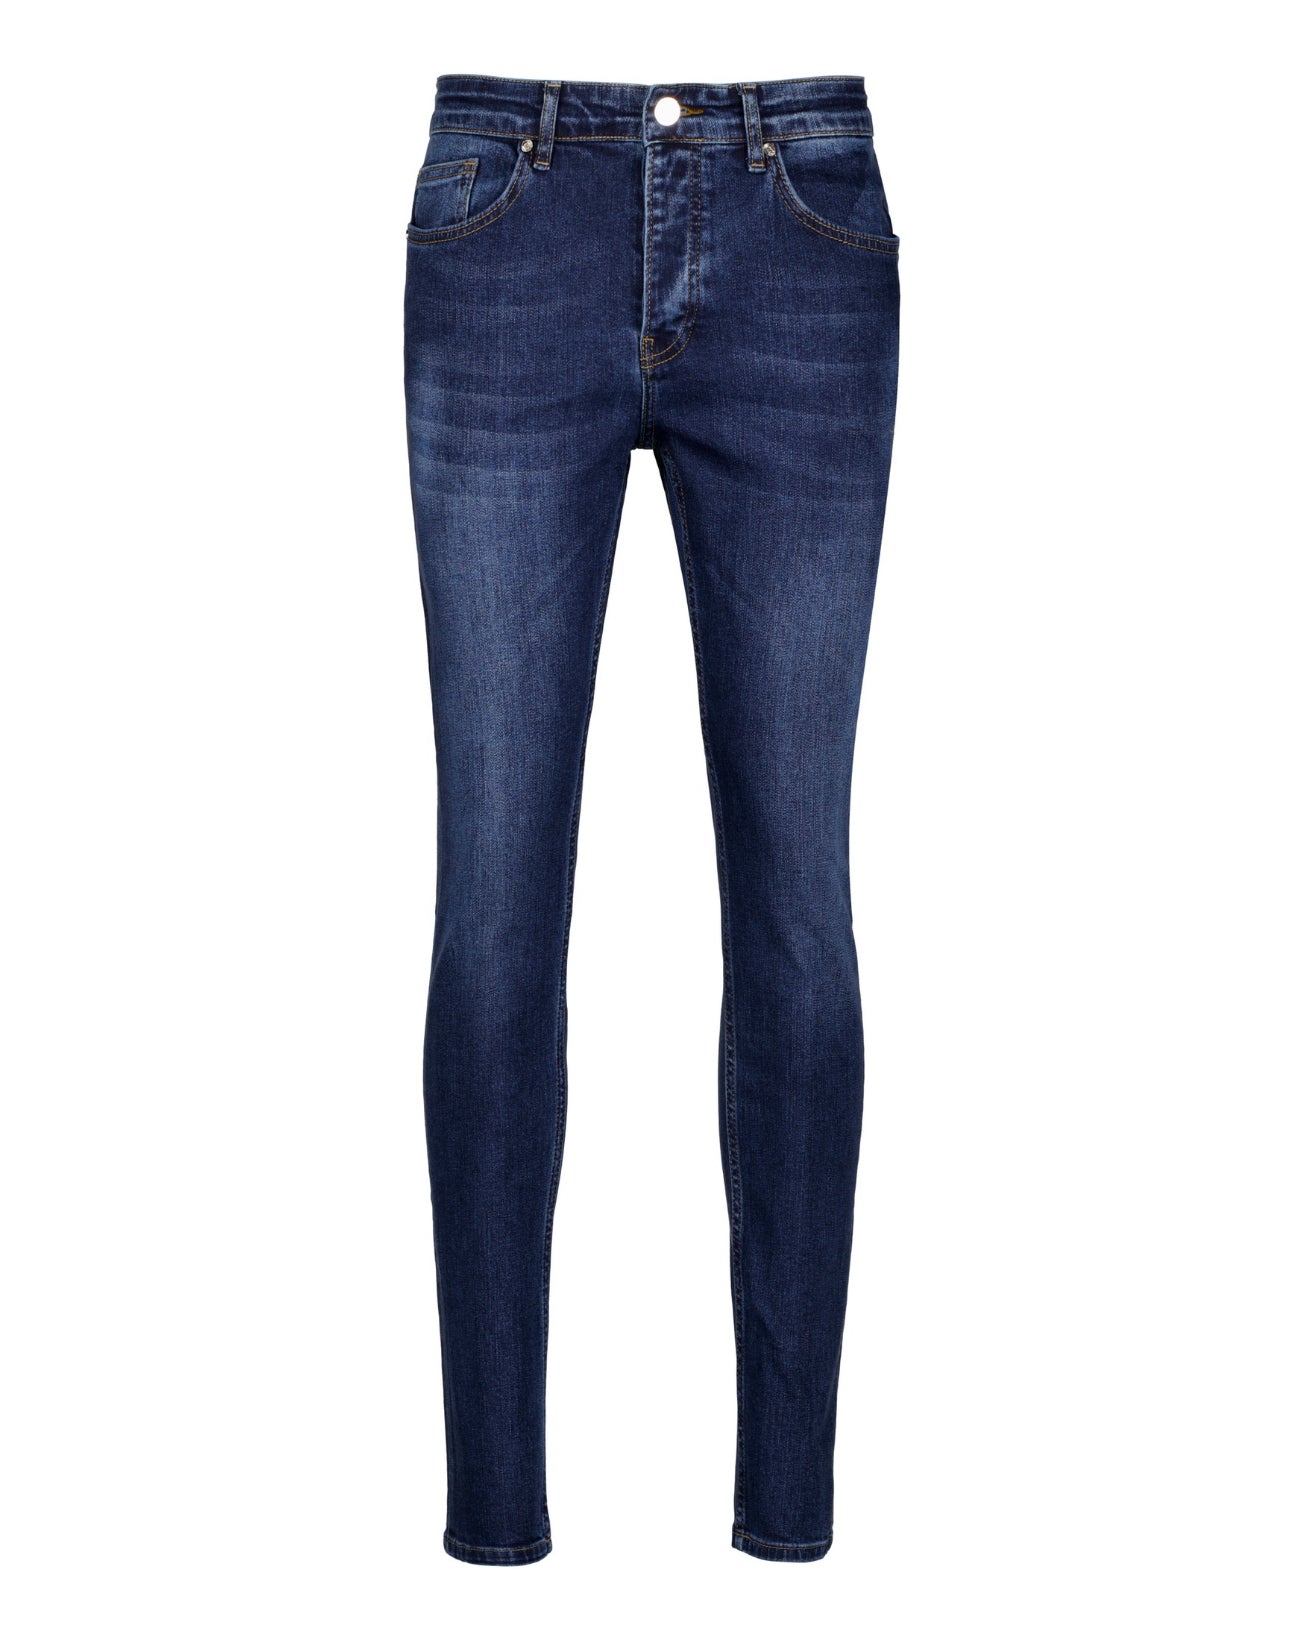 The Fernan Blue Classic Jeans - Jeans by Urbbana